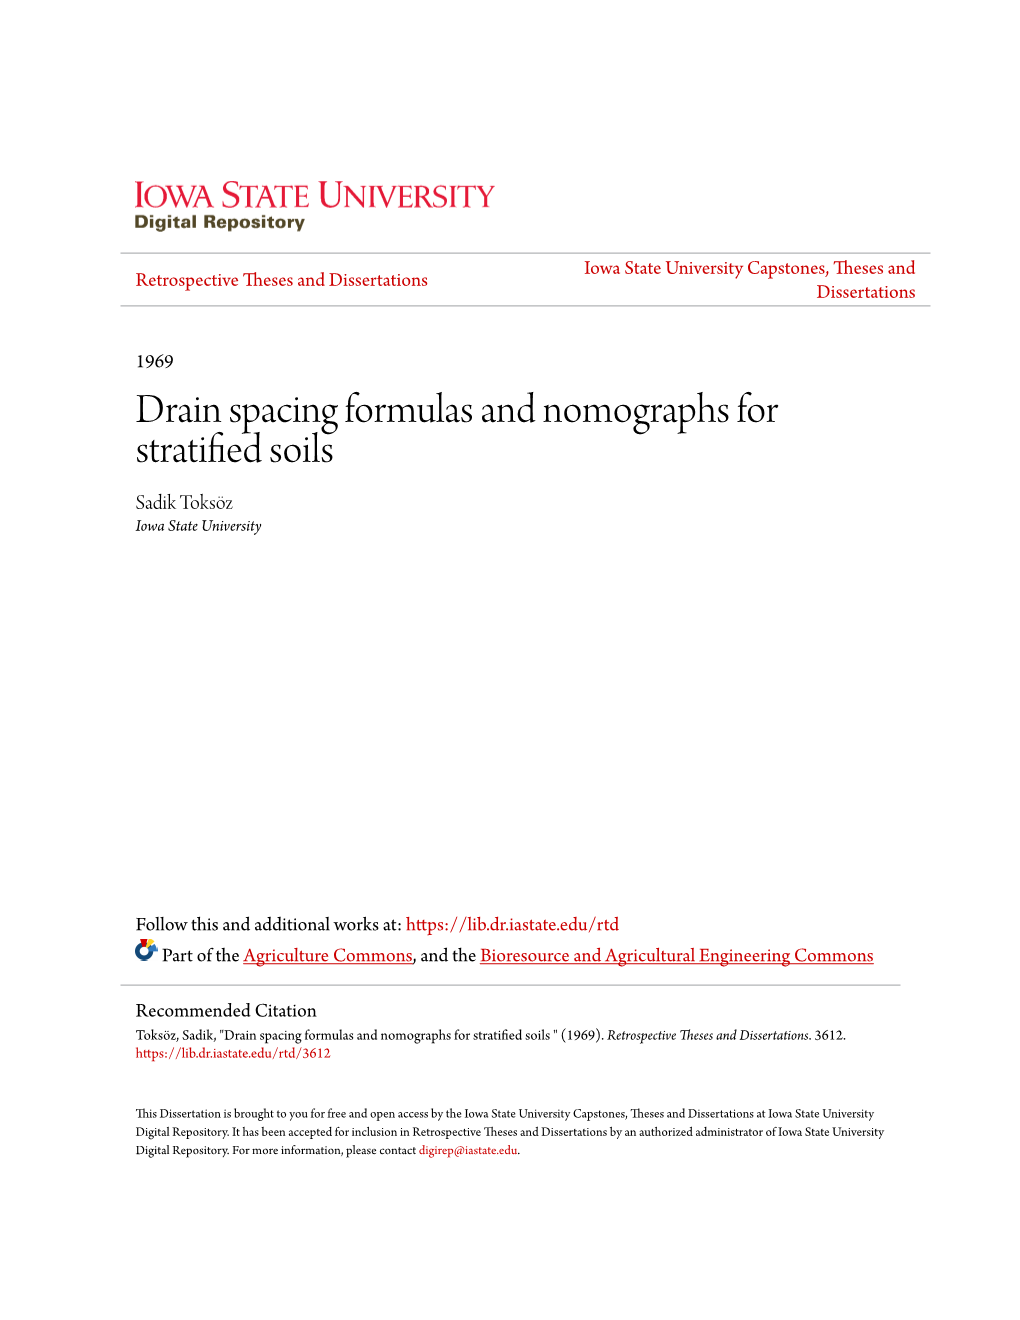 Drain Spacing Formulas and Nomographs for Stratified Soils Sadik Toksöz Iowa State University